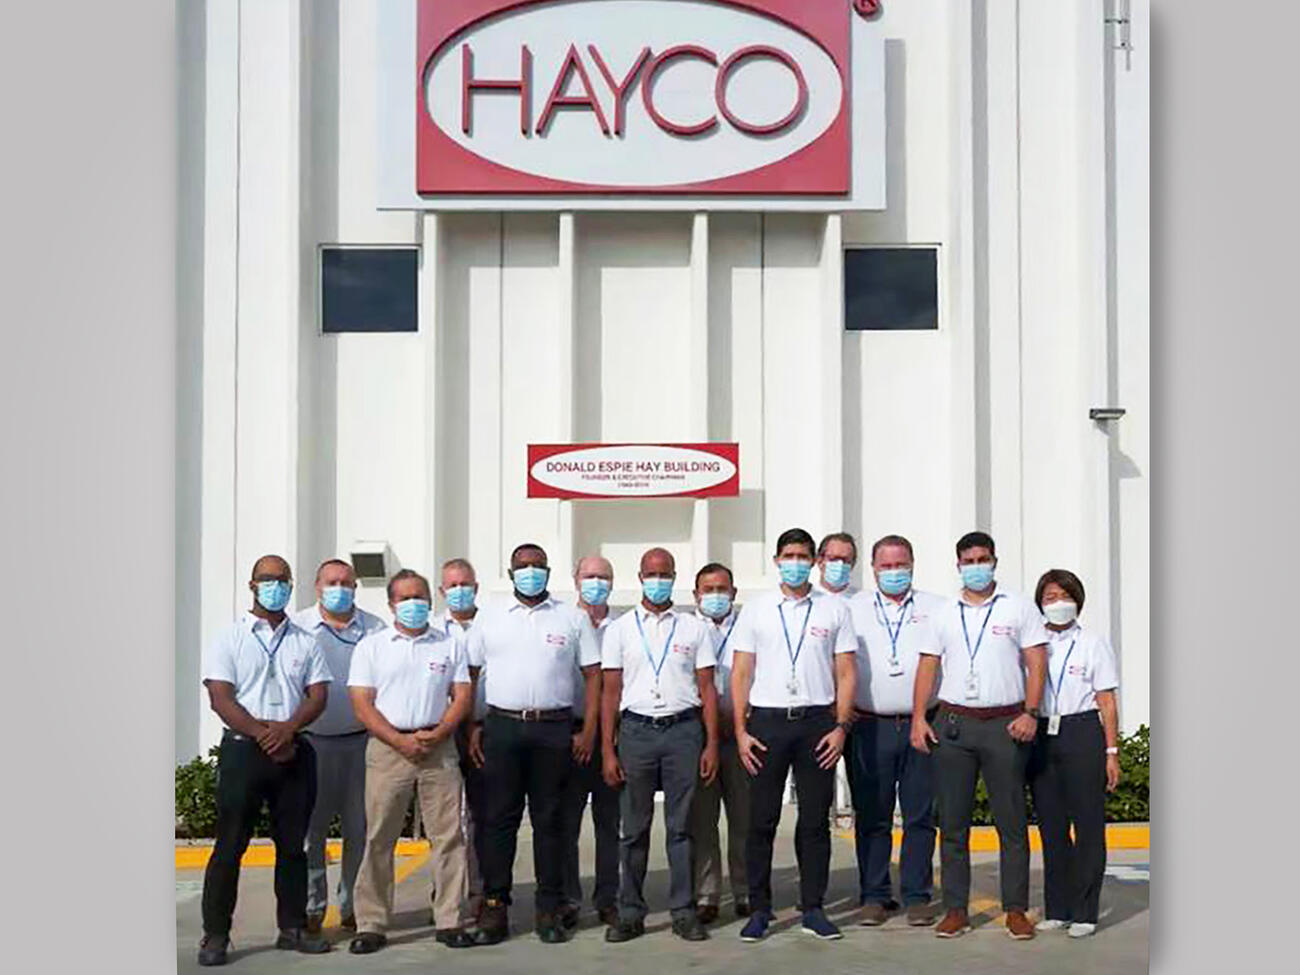 Hayco executives